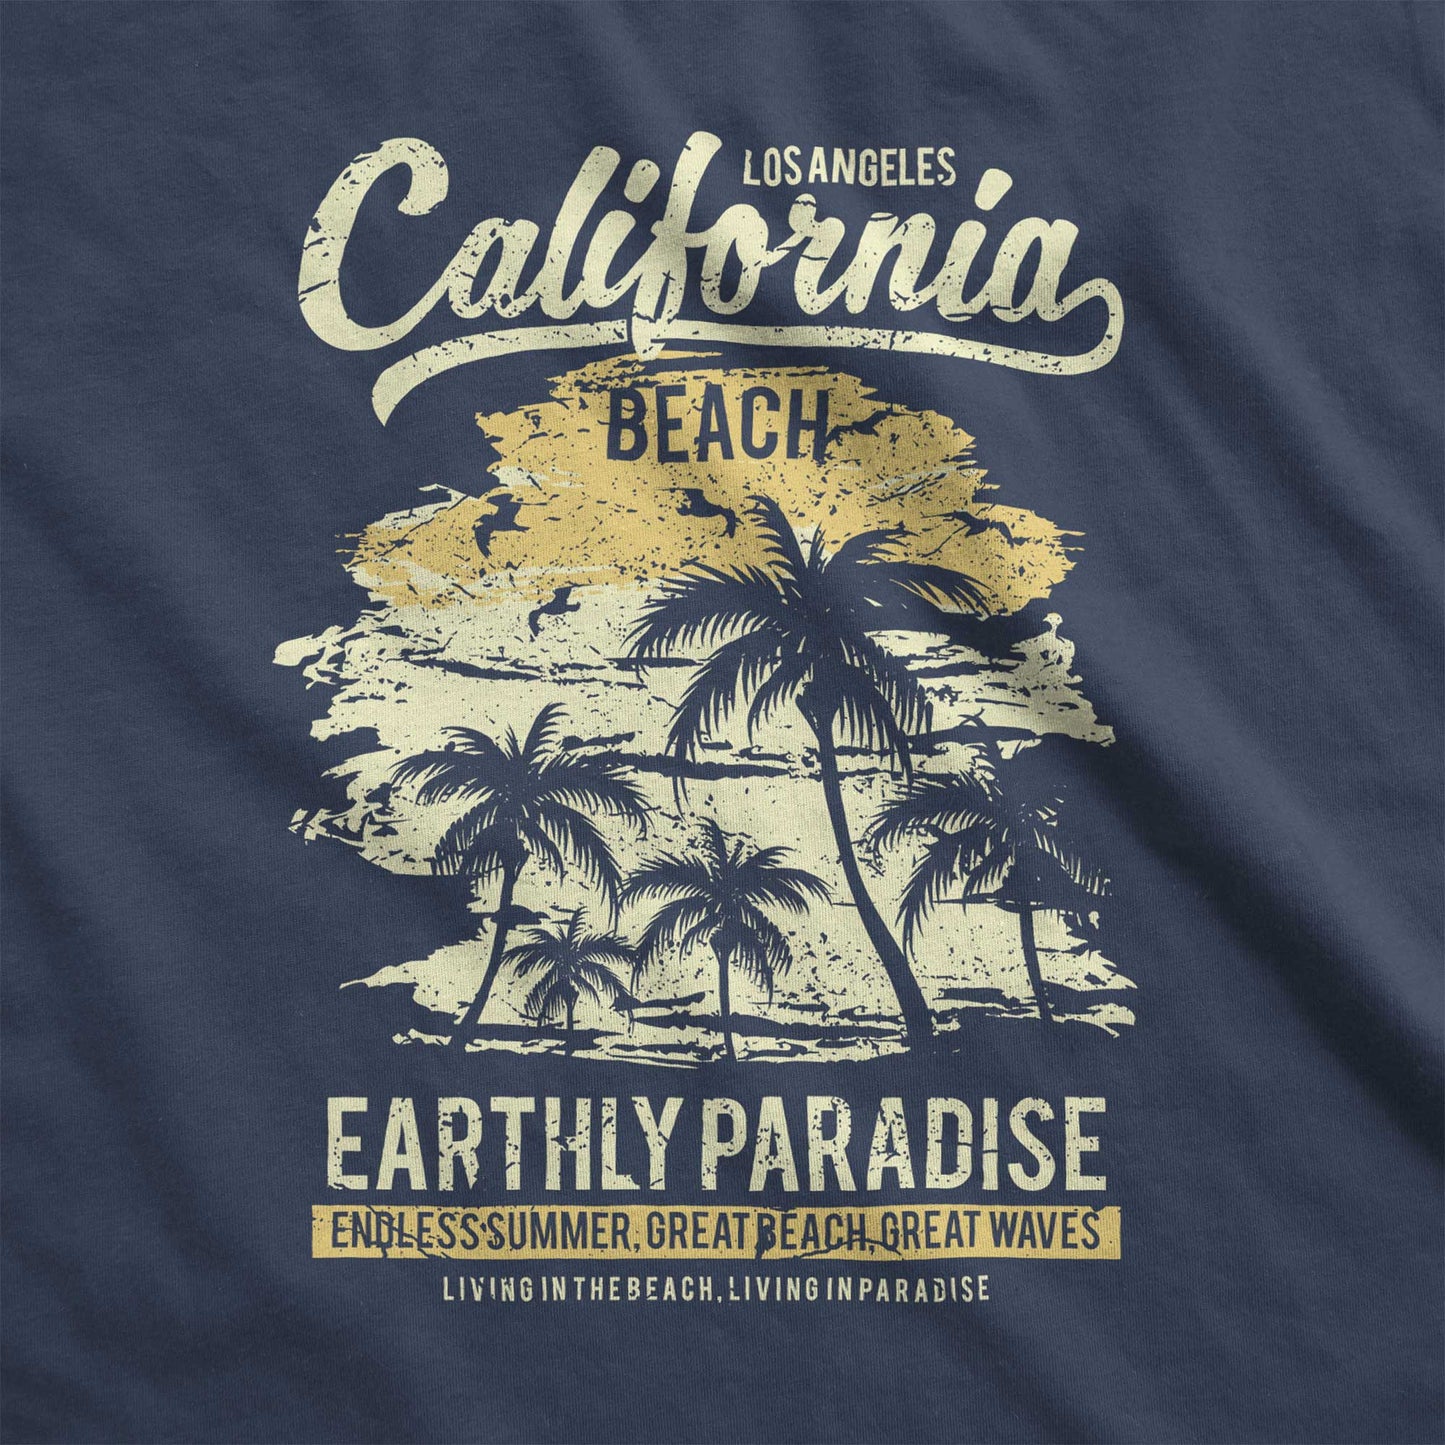 California Beach Earthly Paradise - Adult Unisex Jersey Crew Tee